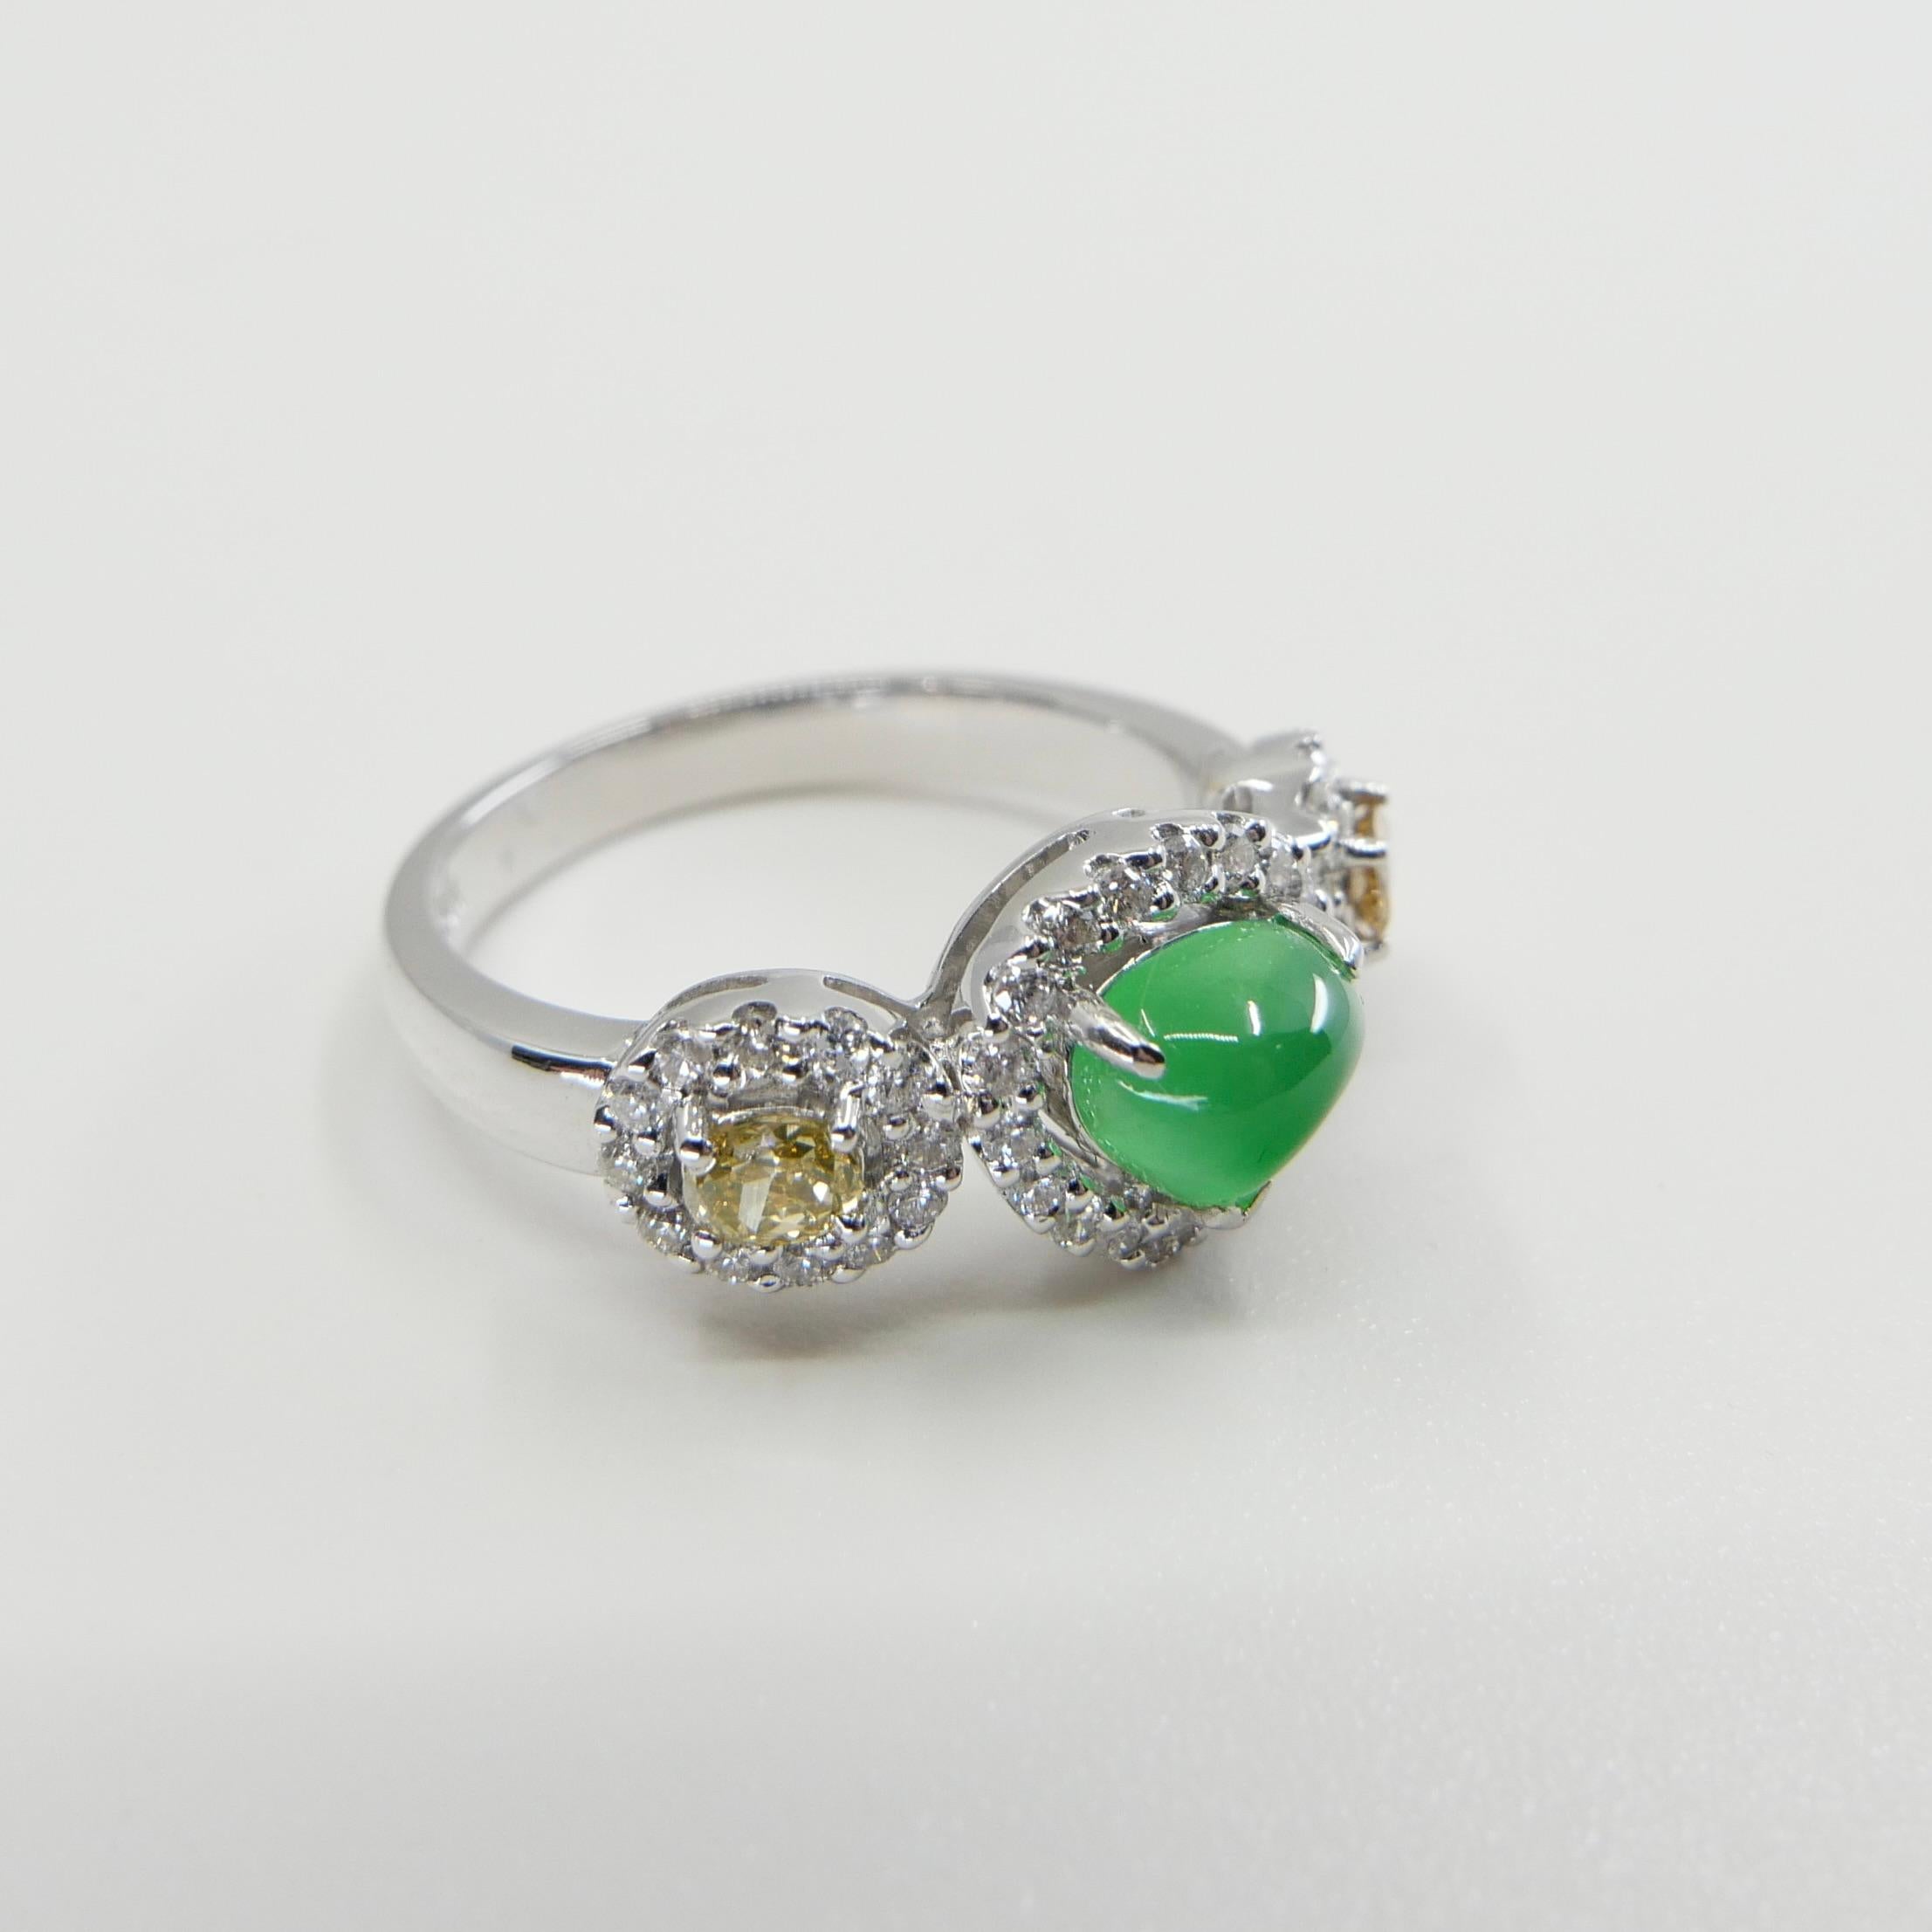 Certified Jade & Fancy Yellow Diamond Cocktail Ring, Glowing Apple Green Jade For Sale 11